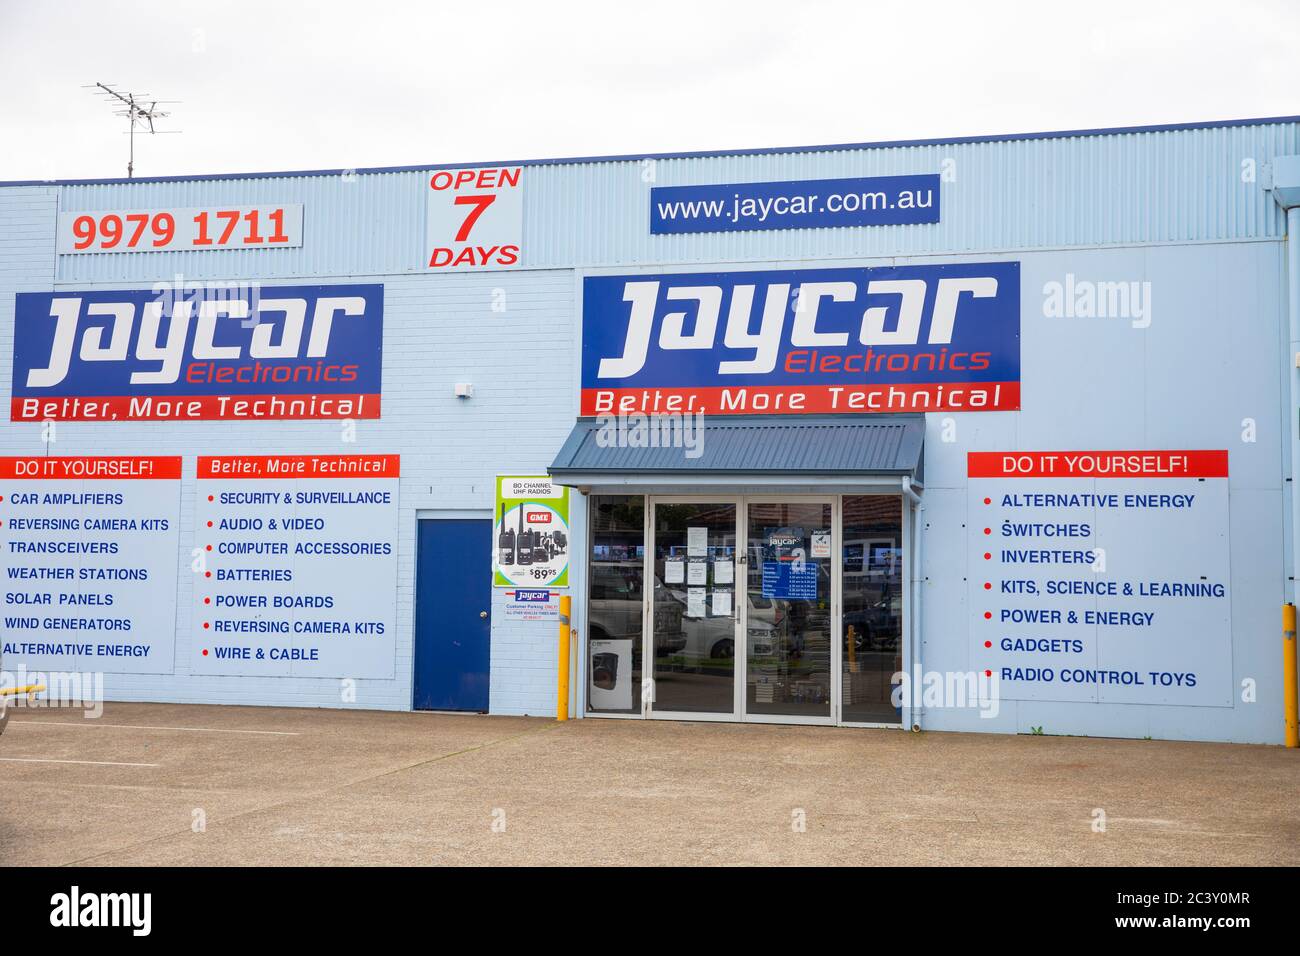 Jaycar australian electronics retailer, one of their stores in Sydney,Australia  Stock Photo - Alamy